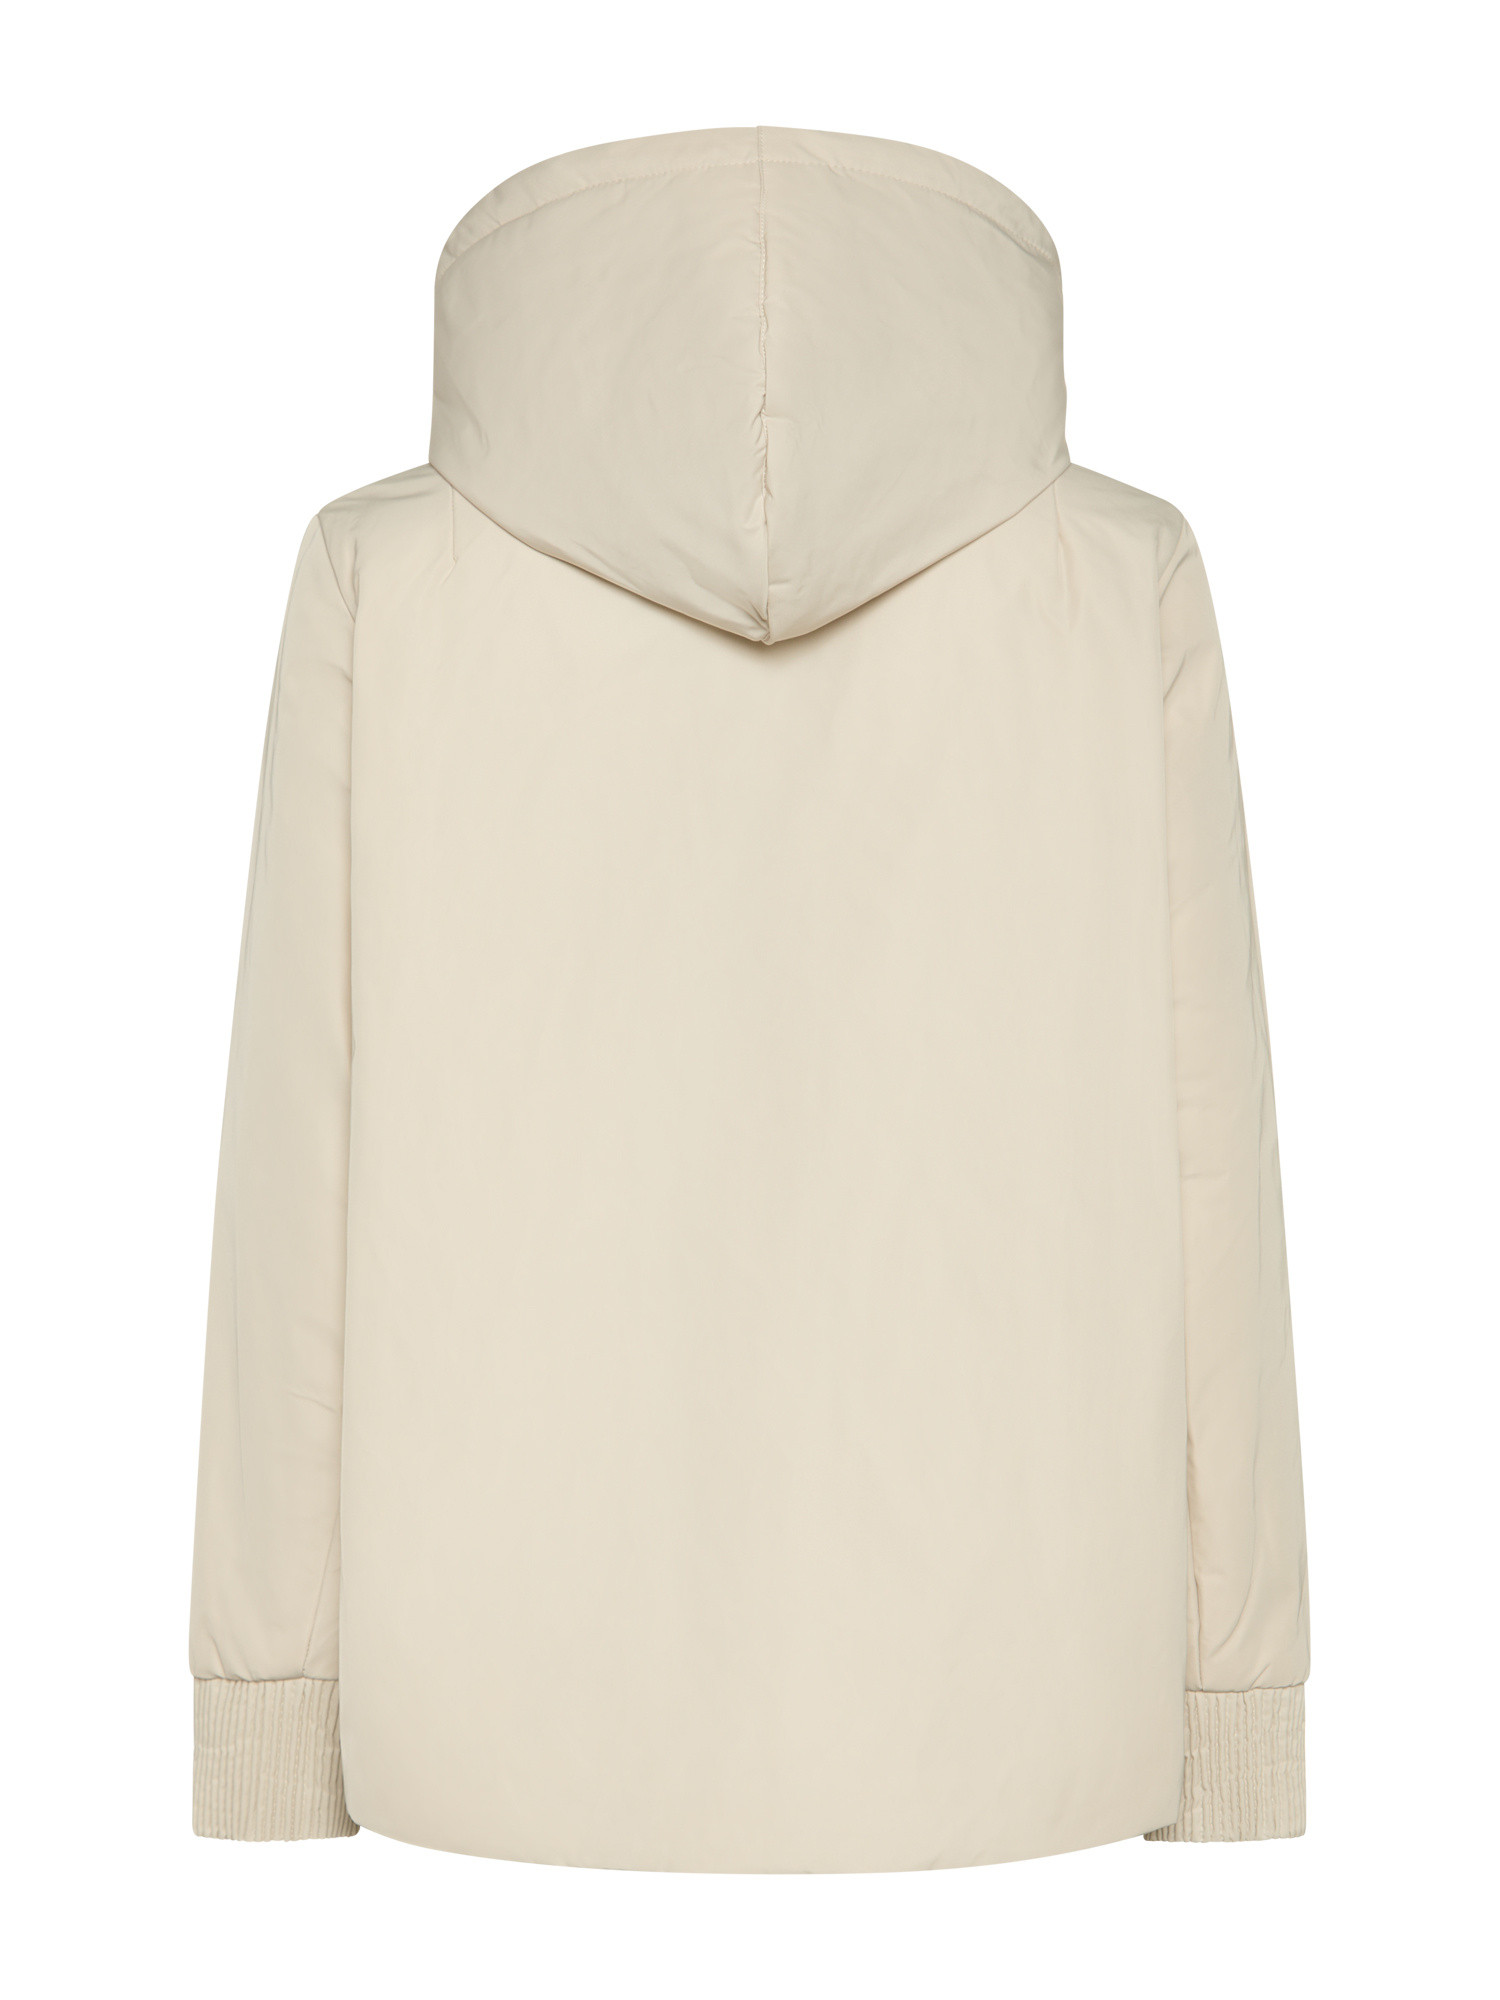 Oof Wear - Short hooded jacket, White Cream, large image number 1